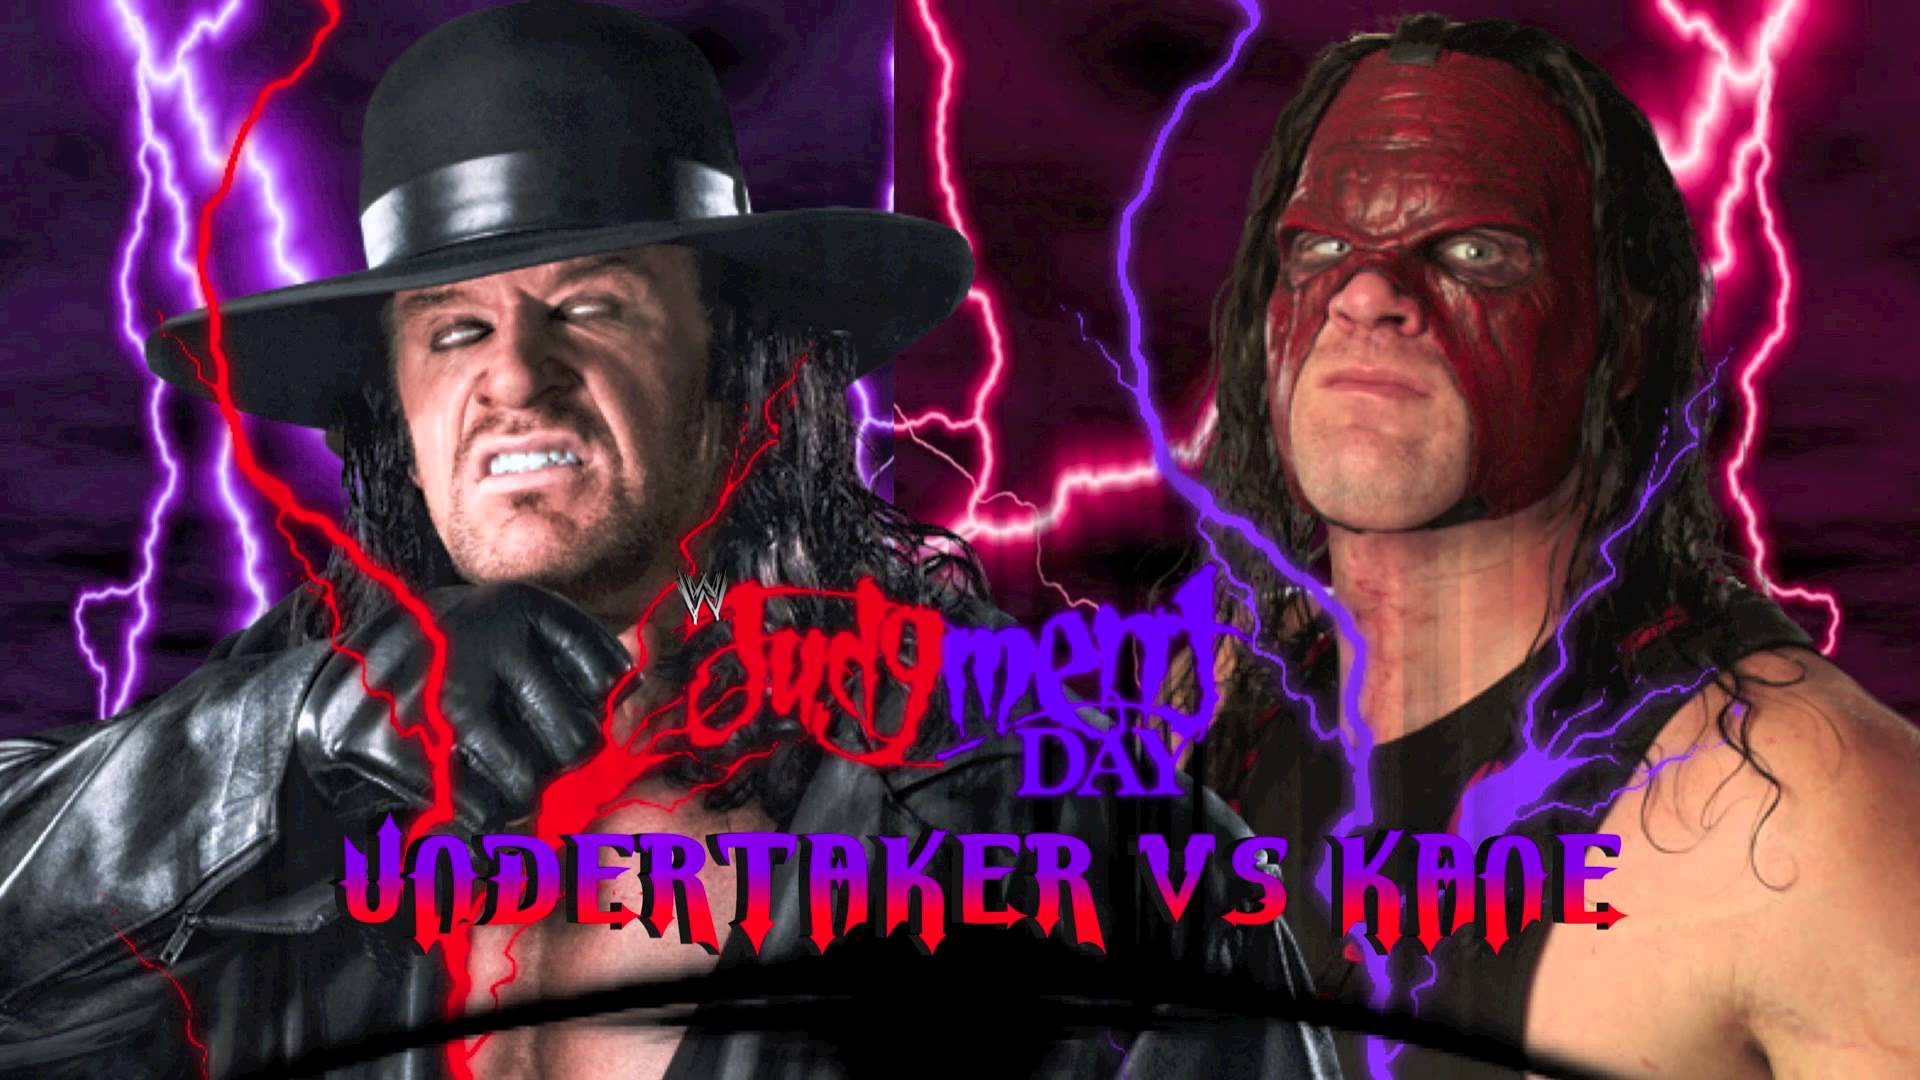 Wwe Judment Day Undertaker Vs Kane